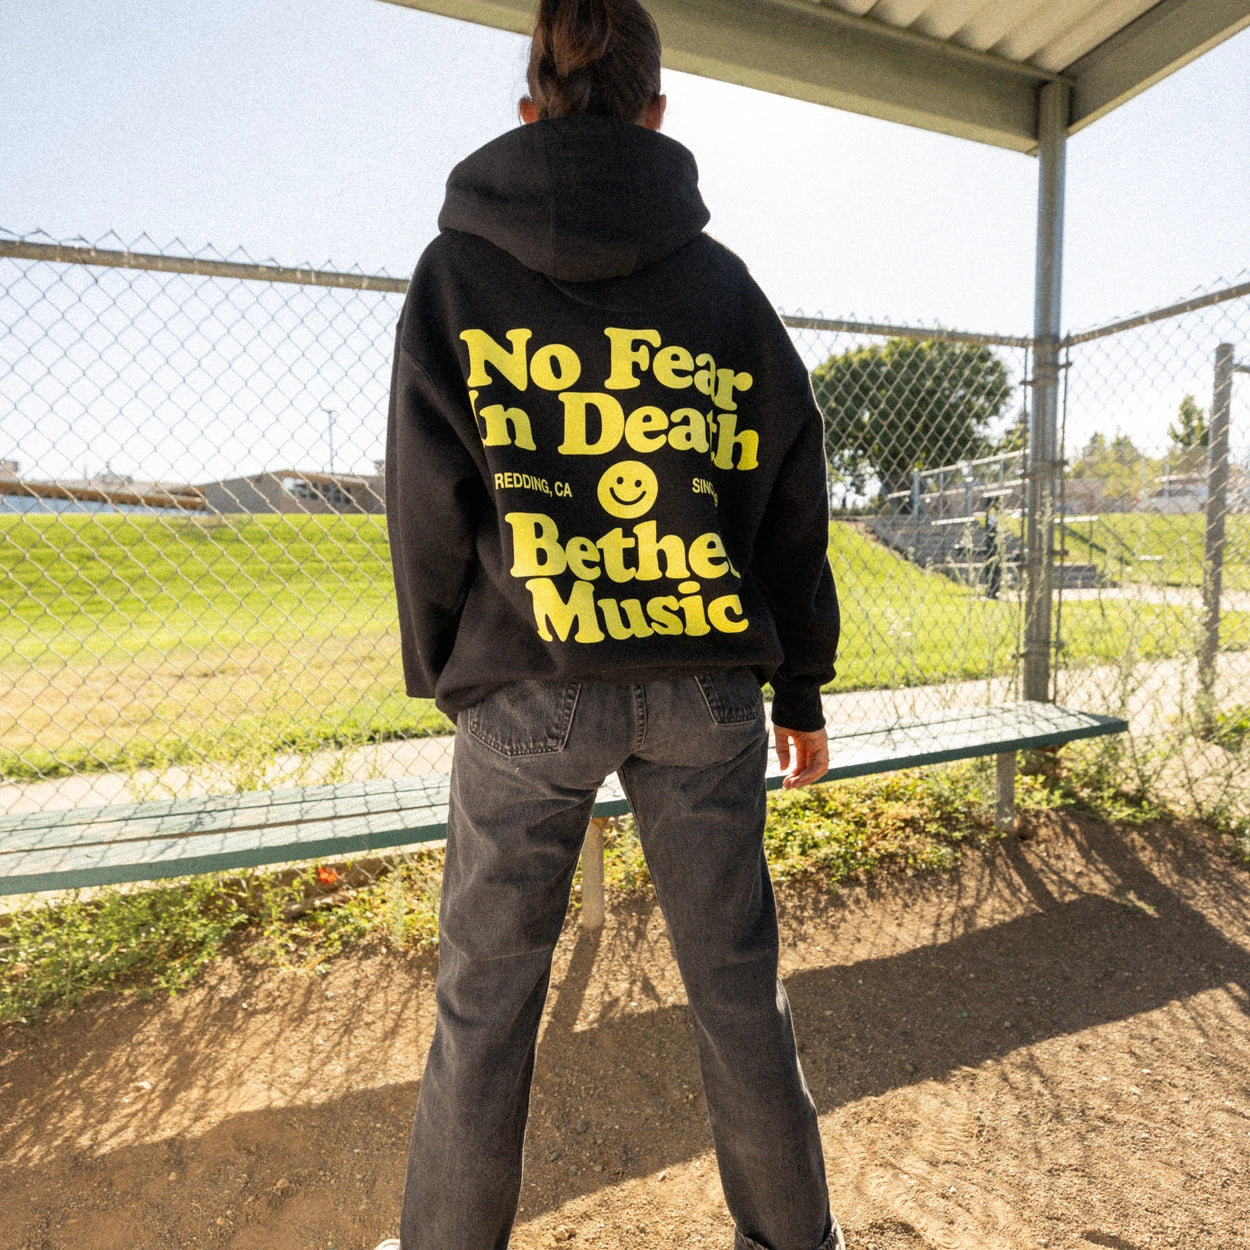 IN DEATH HOODIE Music FEAR Bethel NO Store –